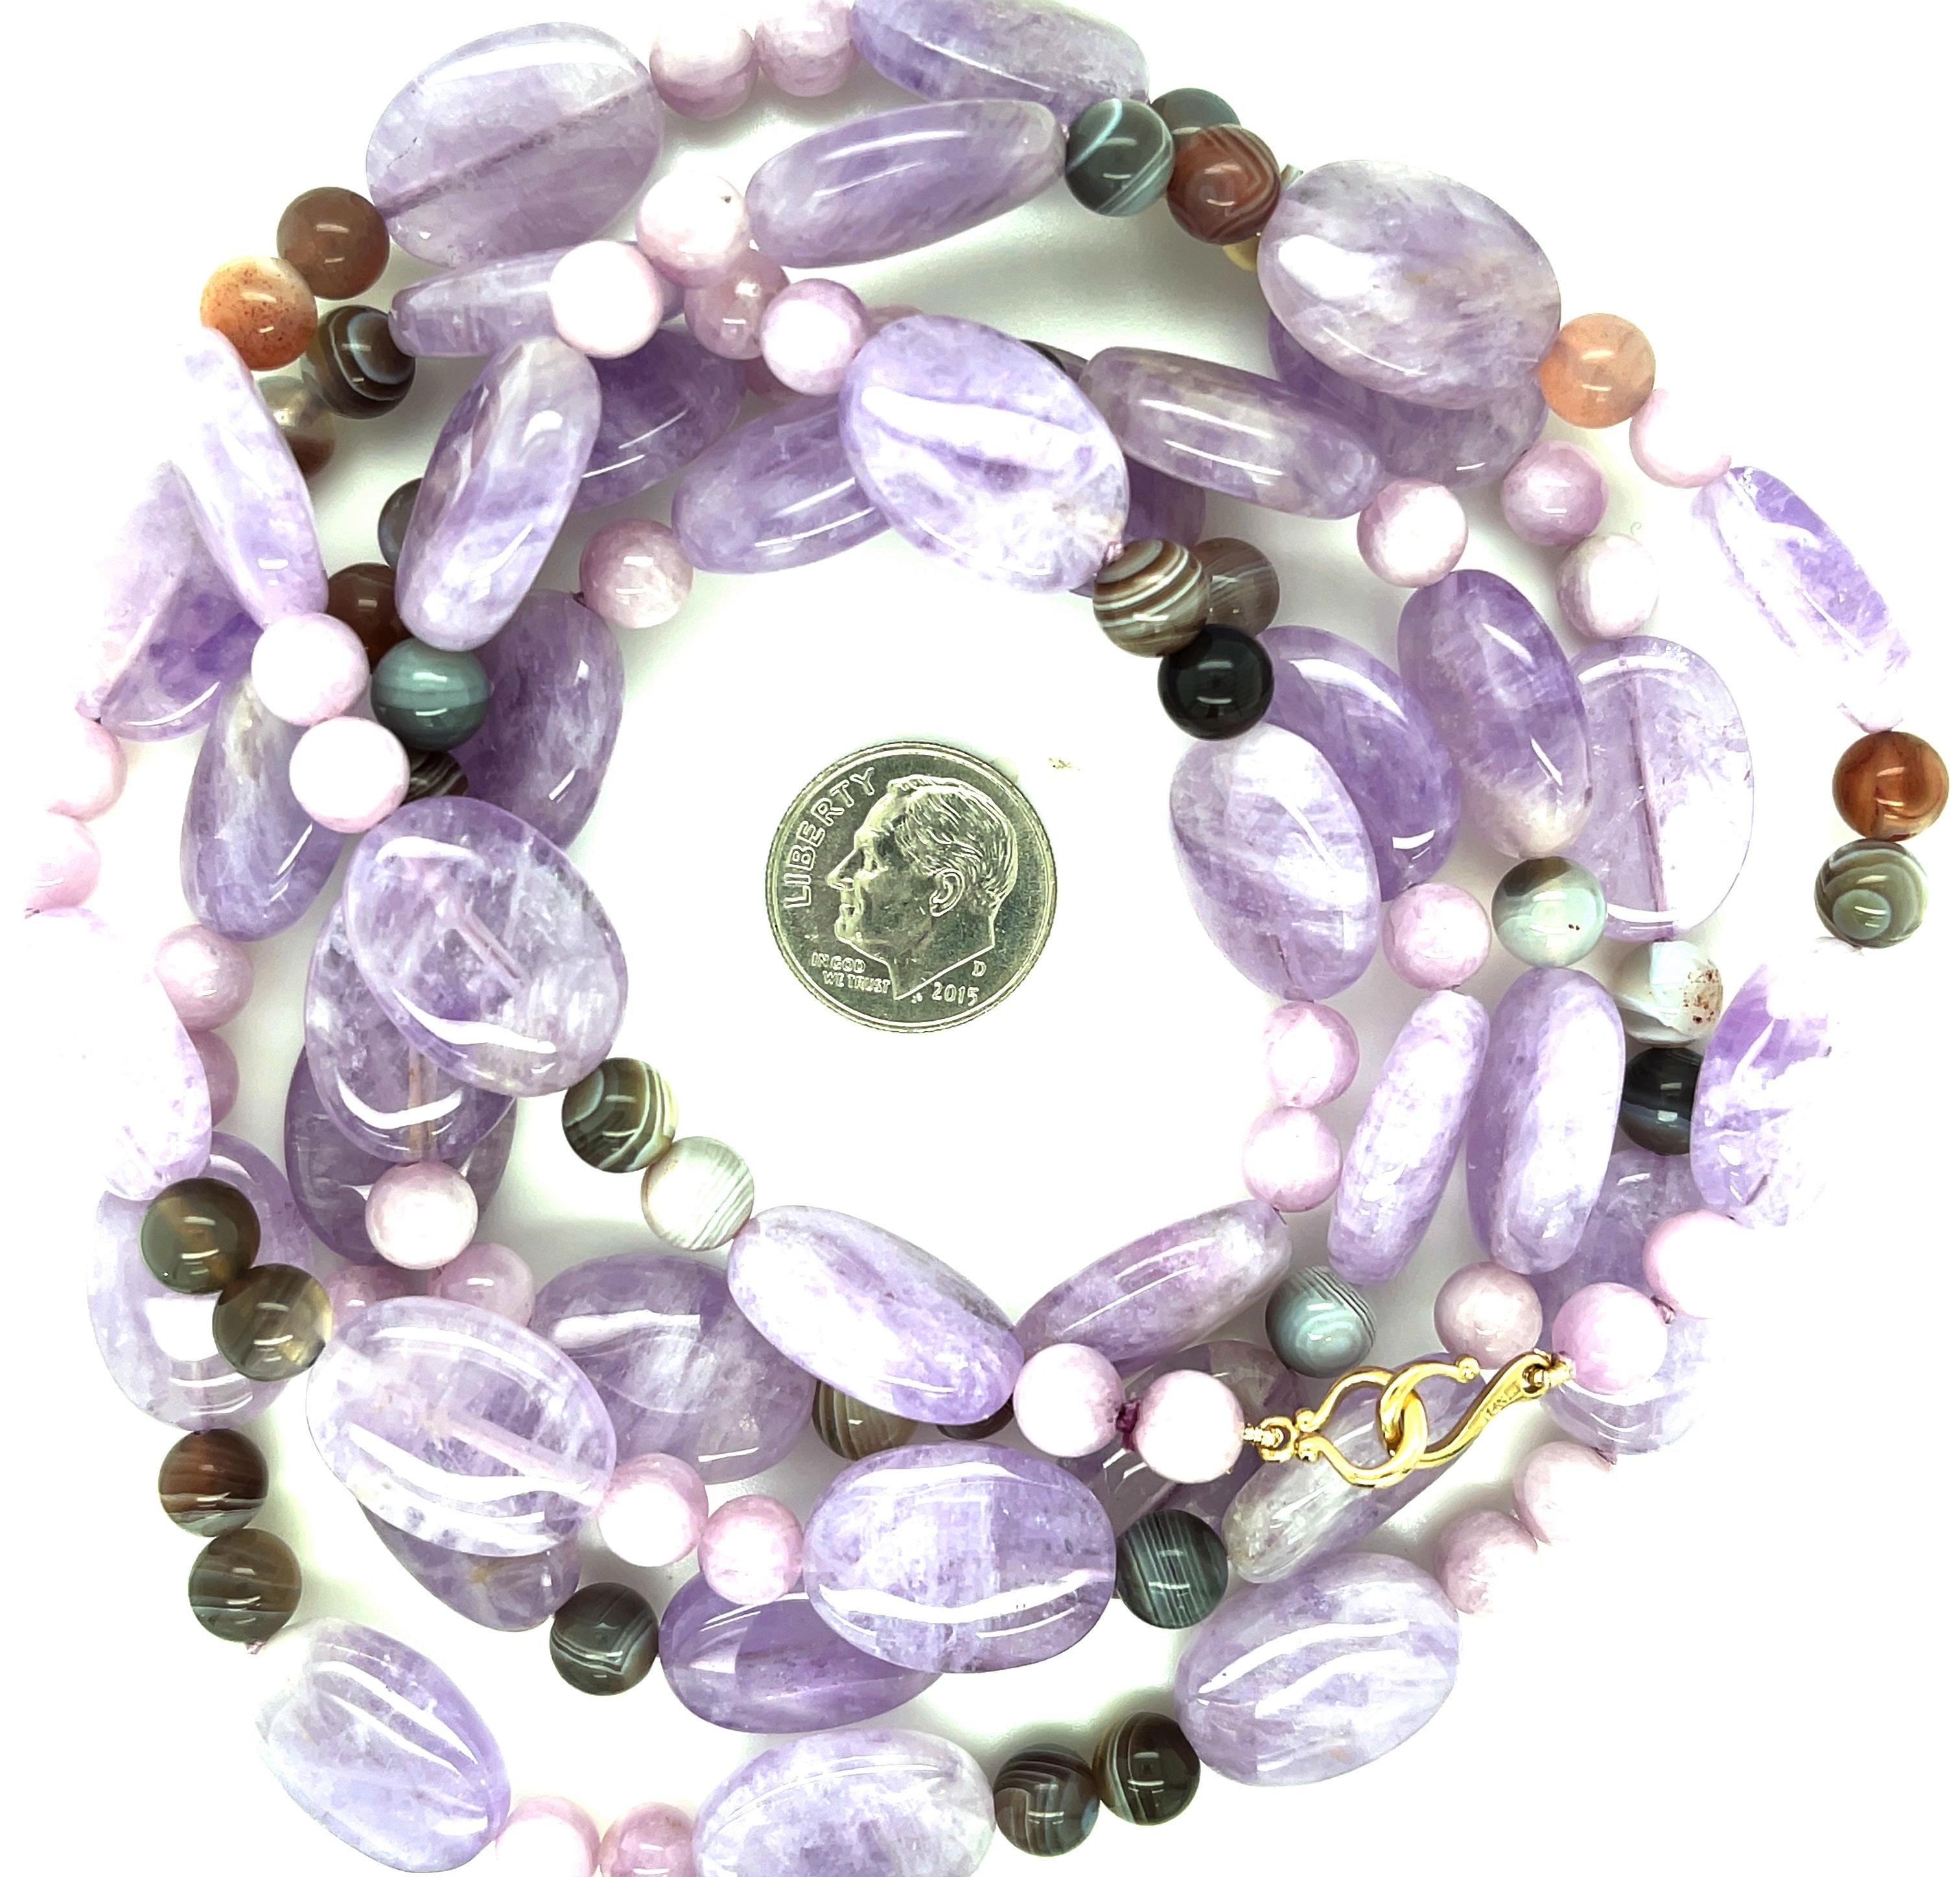 Bead Lavender Rose de France Amethyst, Kunzite and Quartz Necklace with 14k Gold For Sale